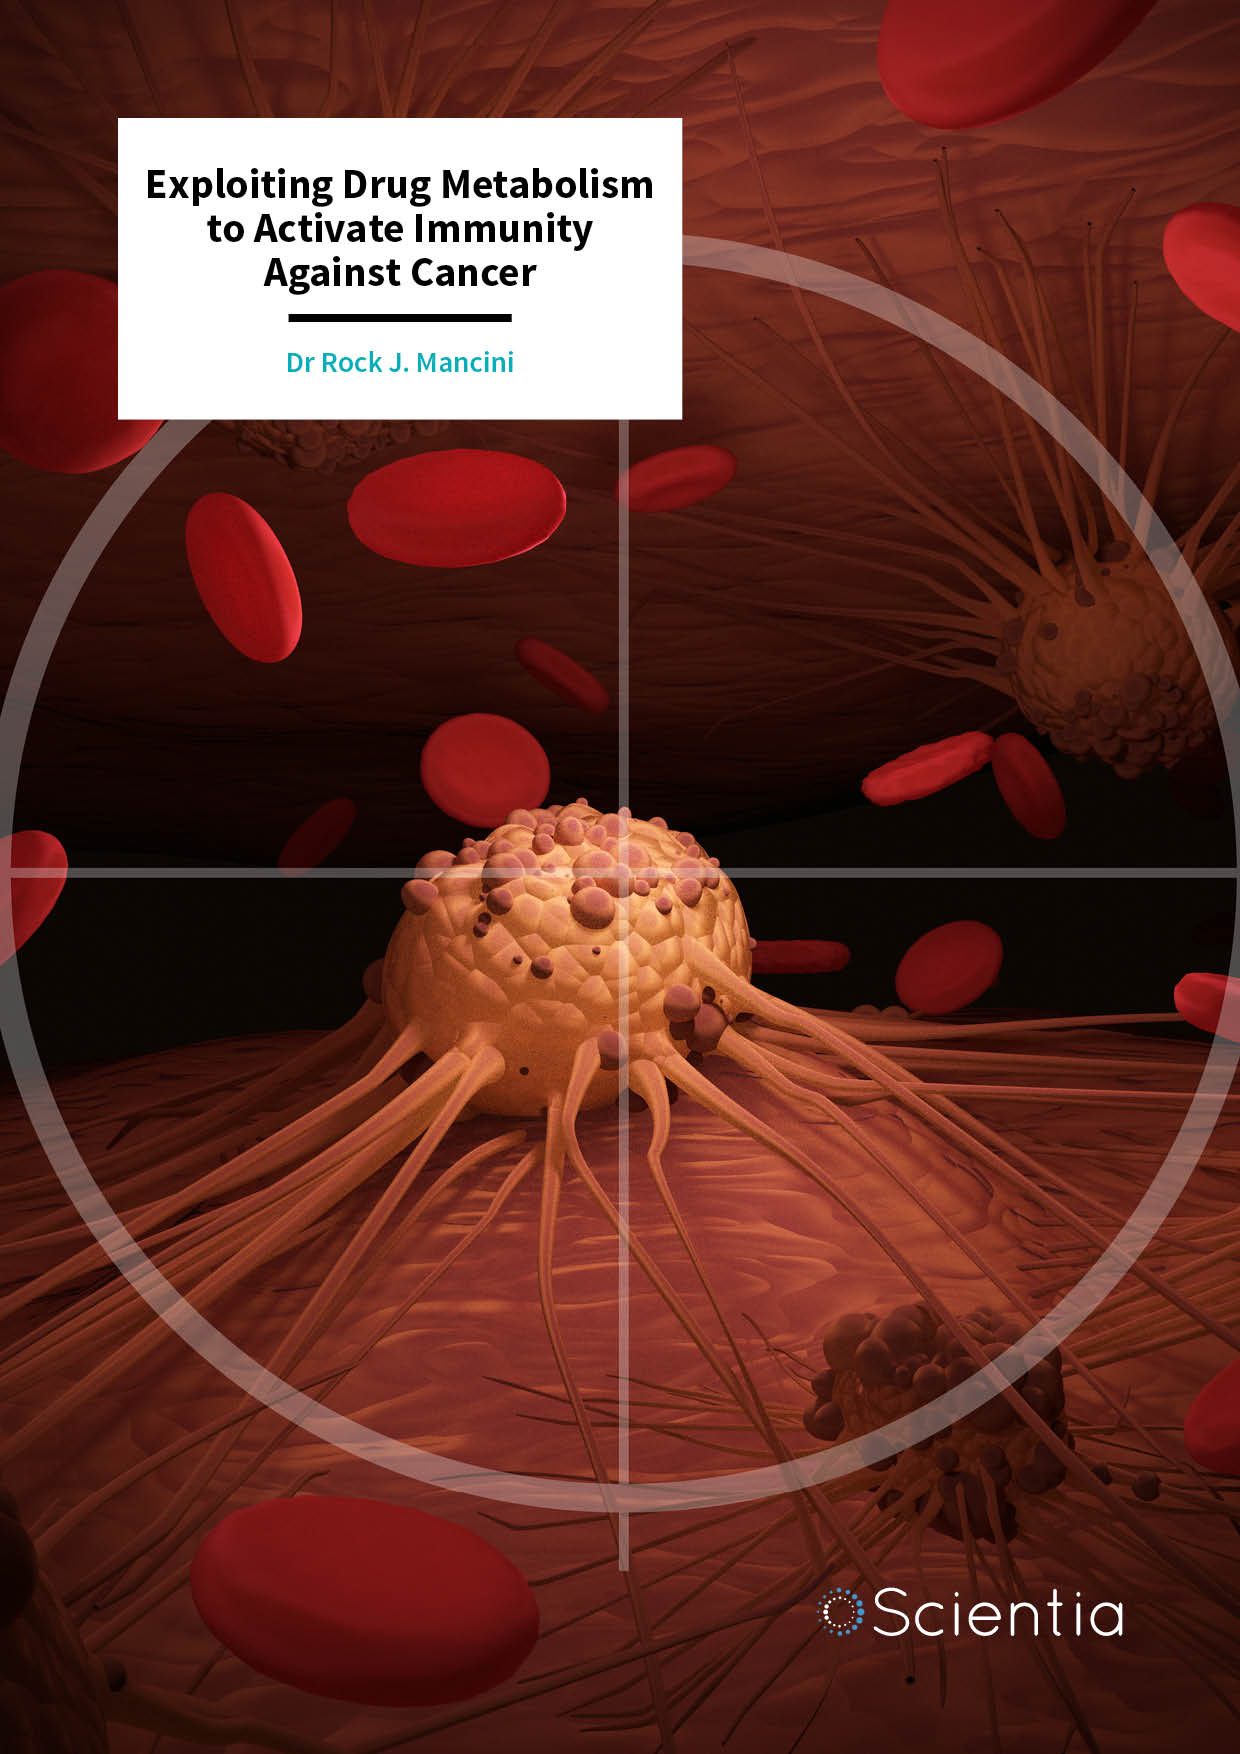 Dr Rock J. Mancini – Exploiting Drug Metabolism to Activate Immunity Against Cancer